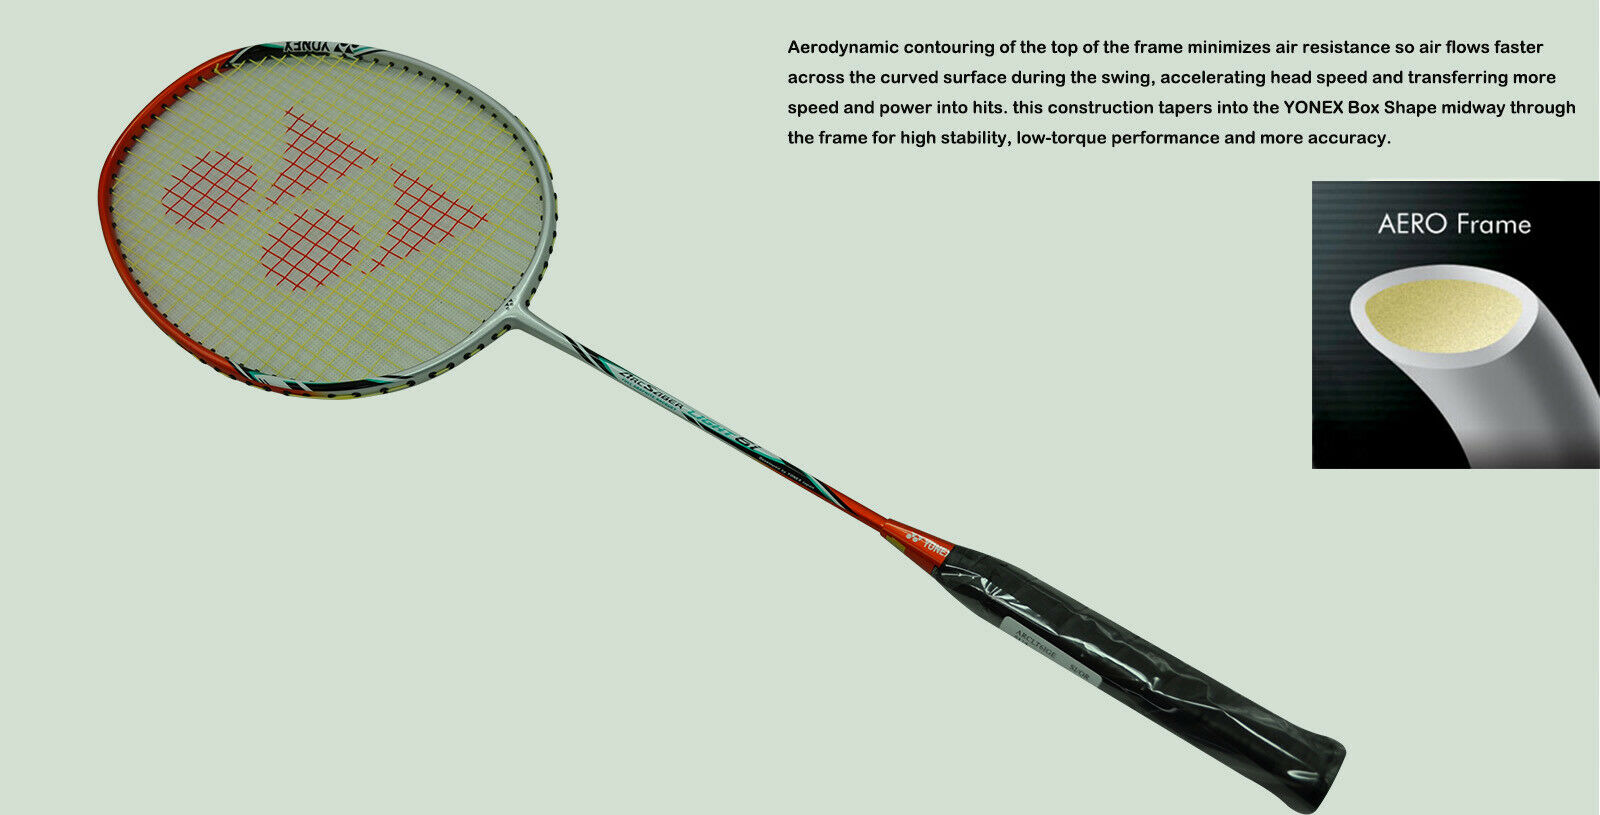 YONEX Arcsaver Light 6i Badminton Pre-Strung Racket Silver/Orange 5UG5